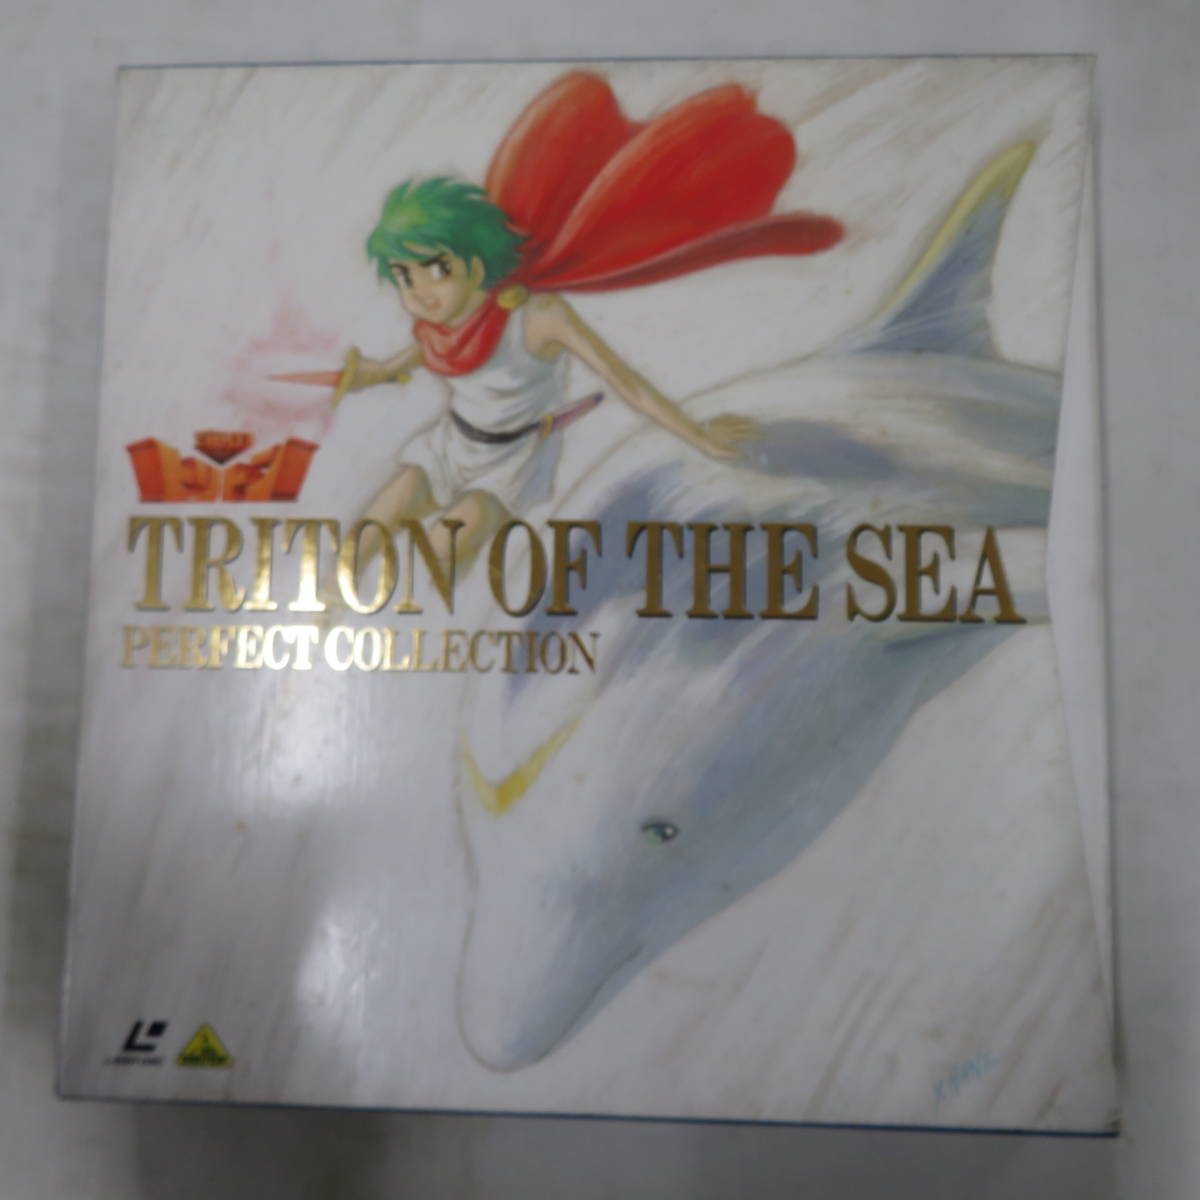 B00154273/[ anime ]*LD7 sheets set box / hand .. insect [ sea. triton / Perfect Collection]